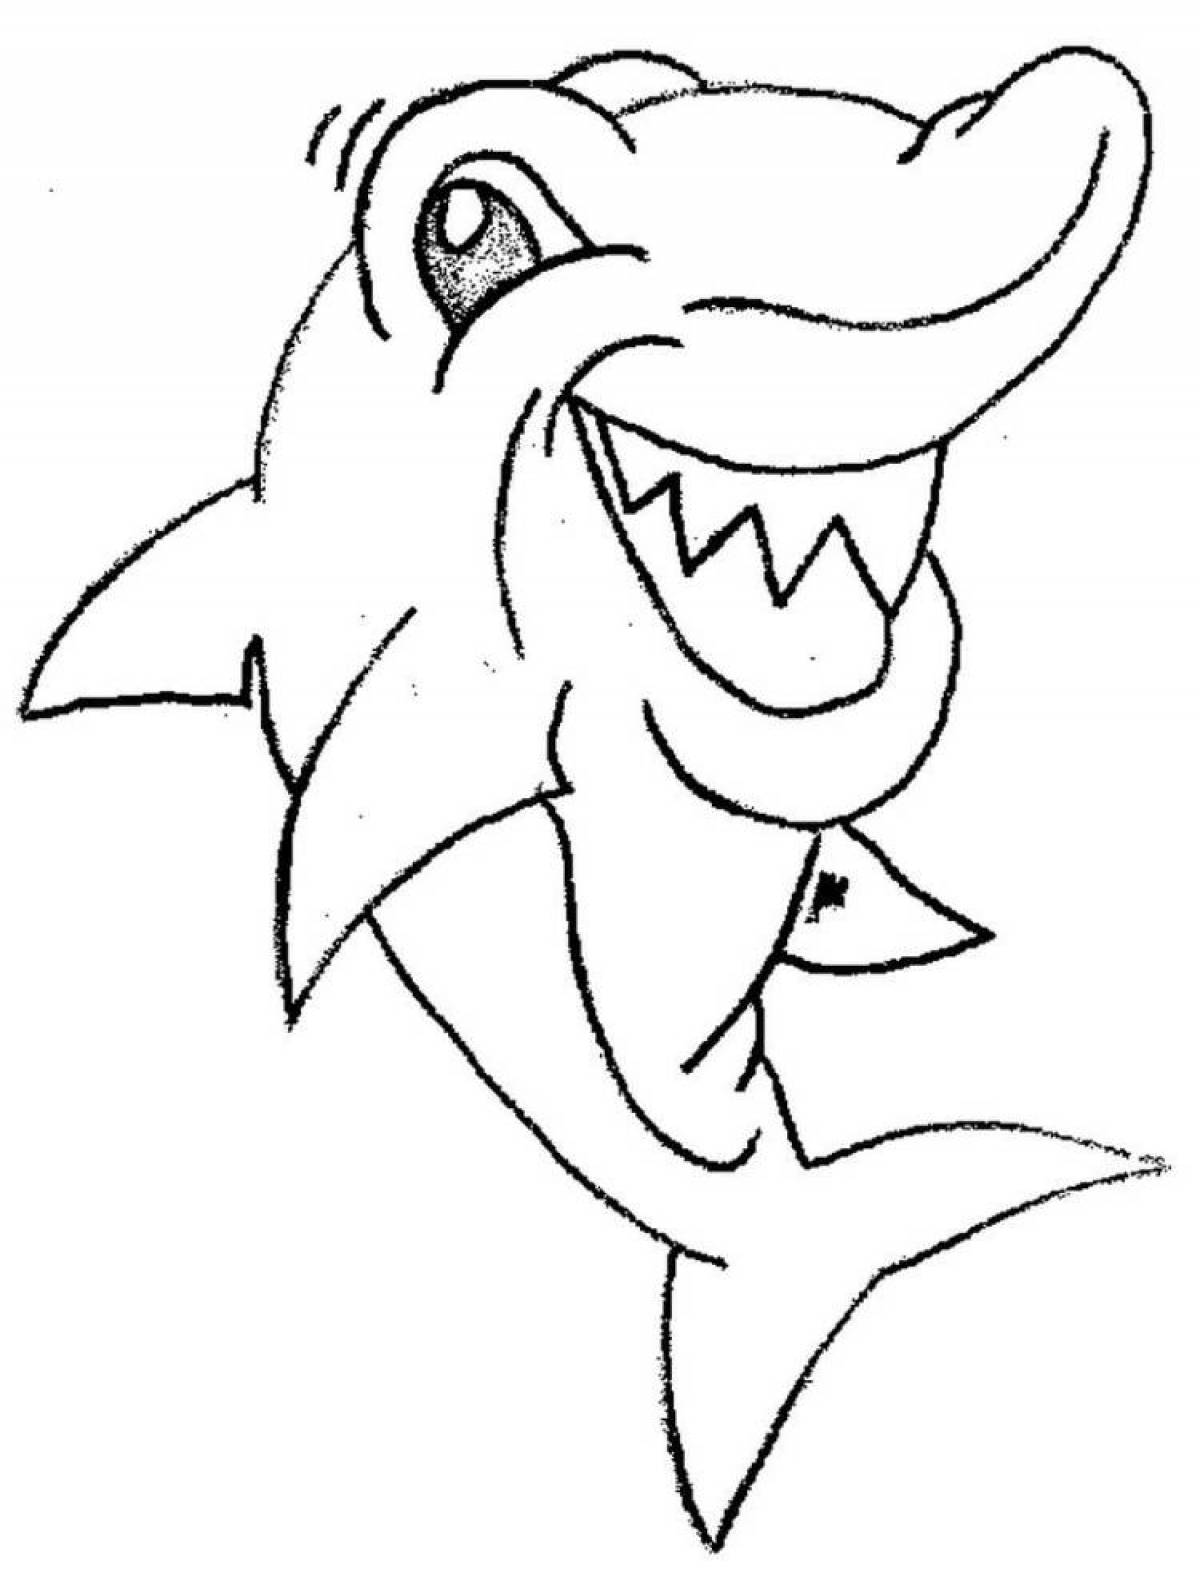 Shark fun coloring book